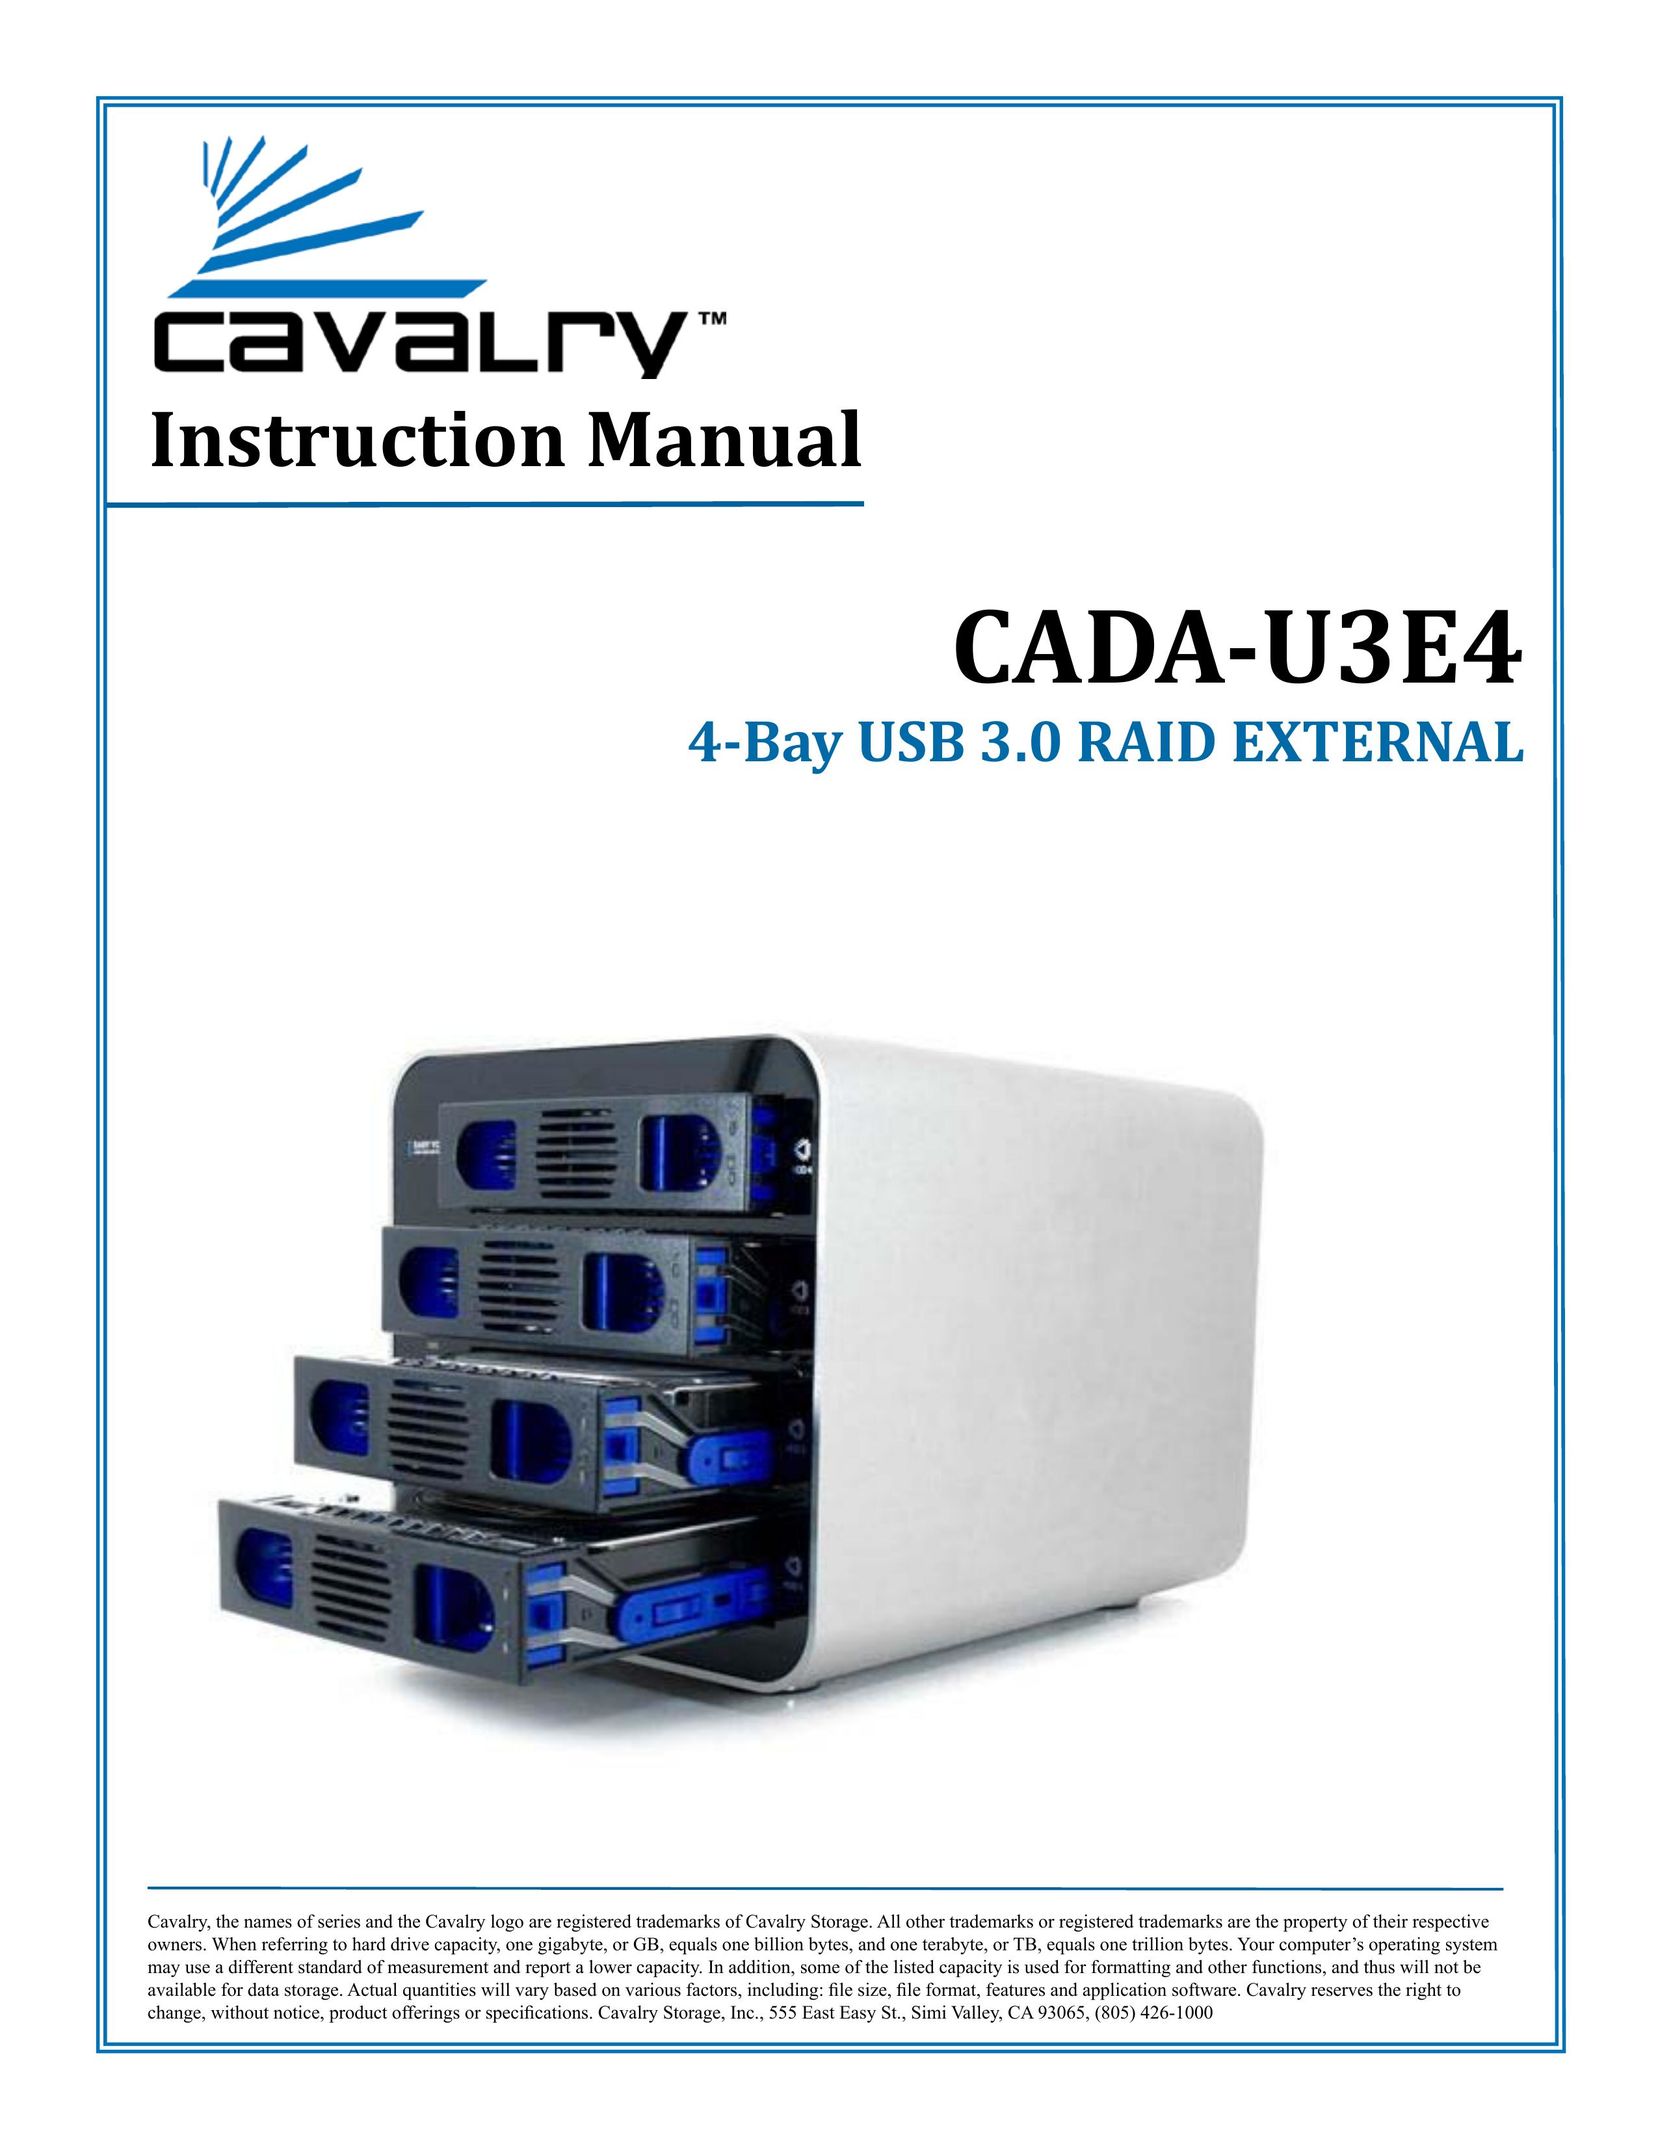 Cavalry Storage CADA-U3E4 Computer Drive User Manual